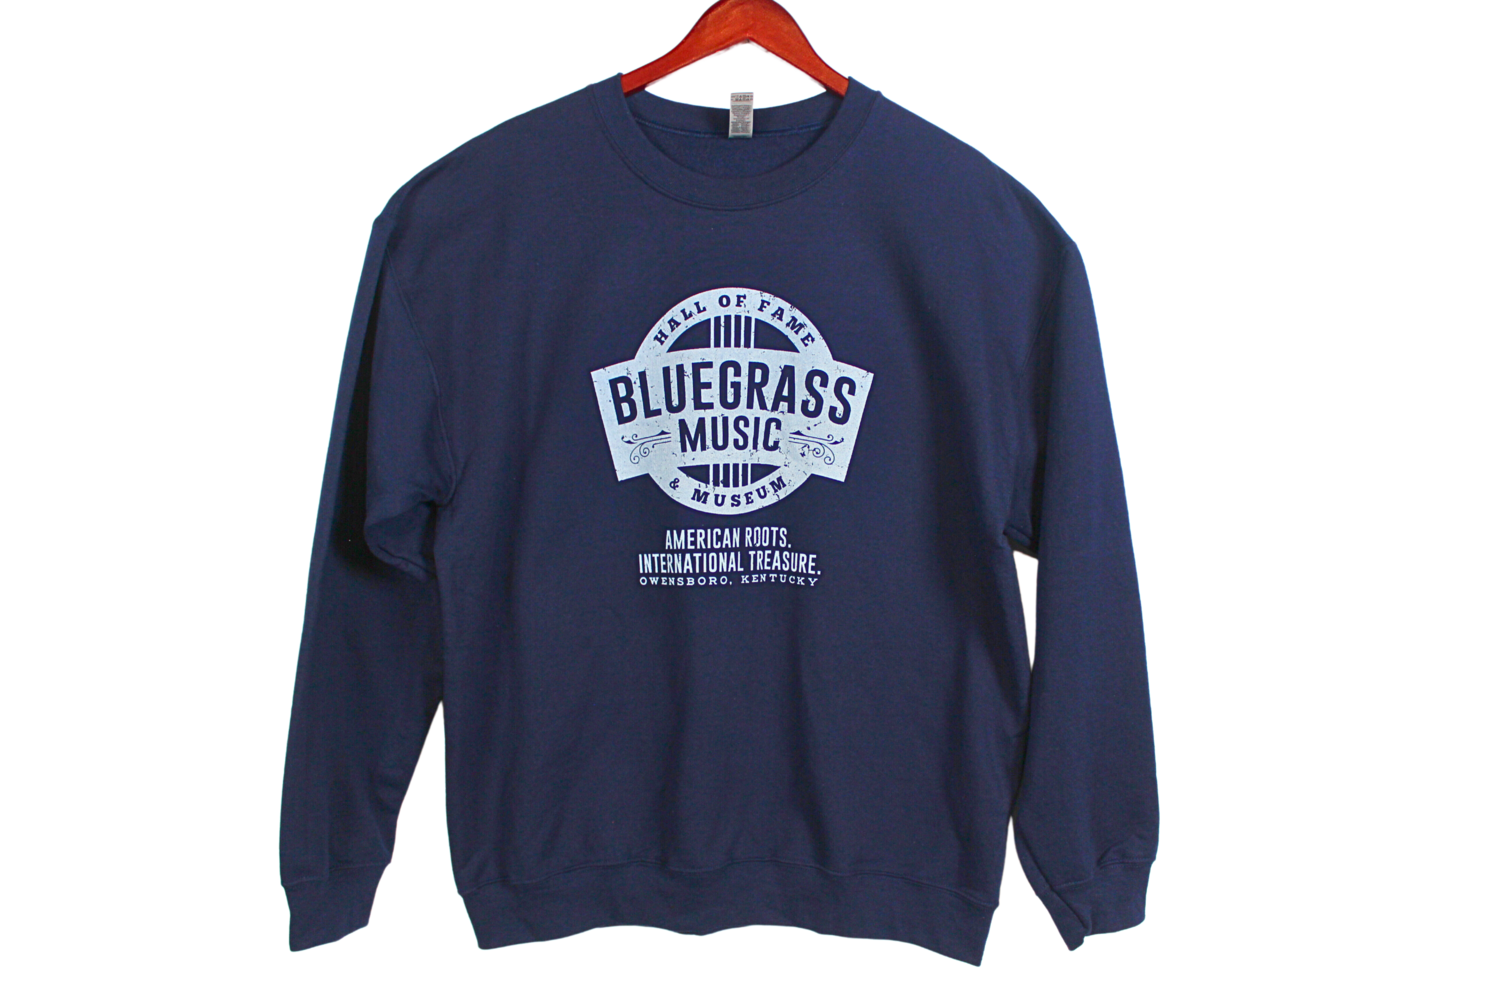 Bluegrass Music Hall of Fame Navy Sweatshirt XL